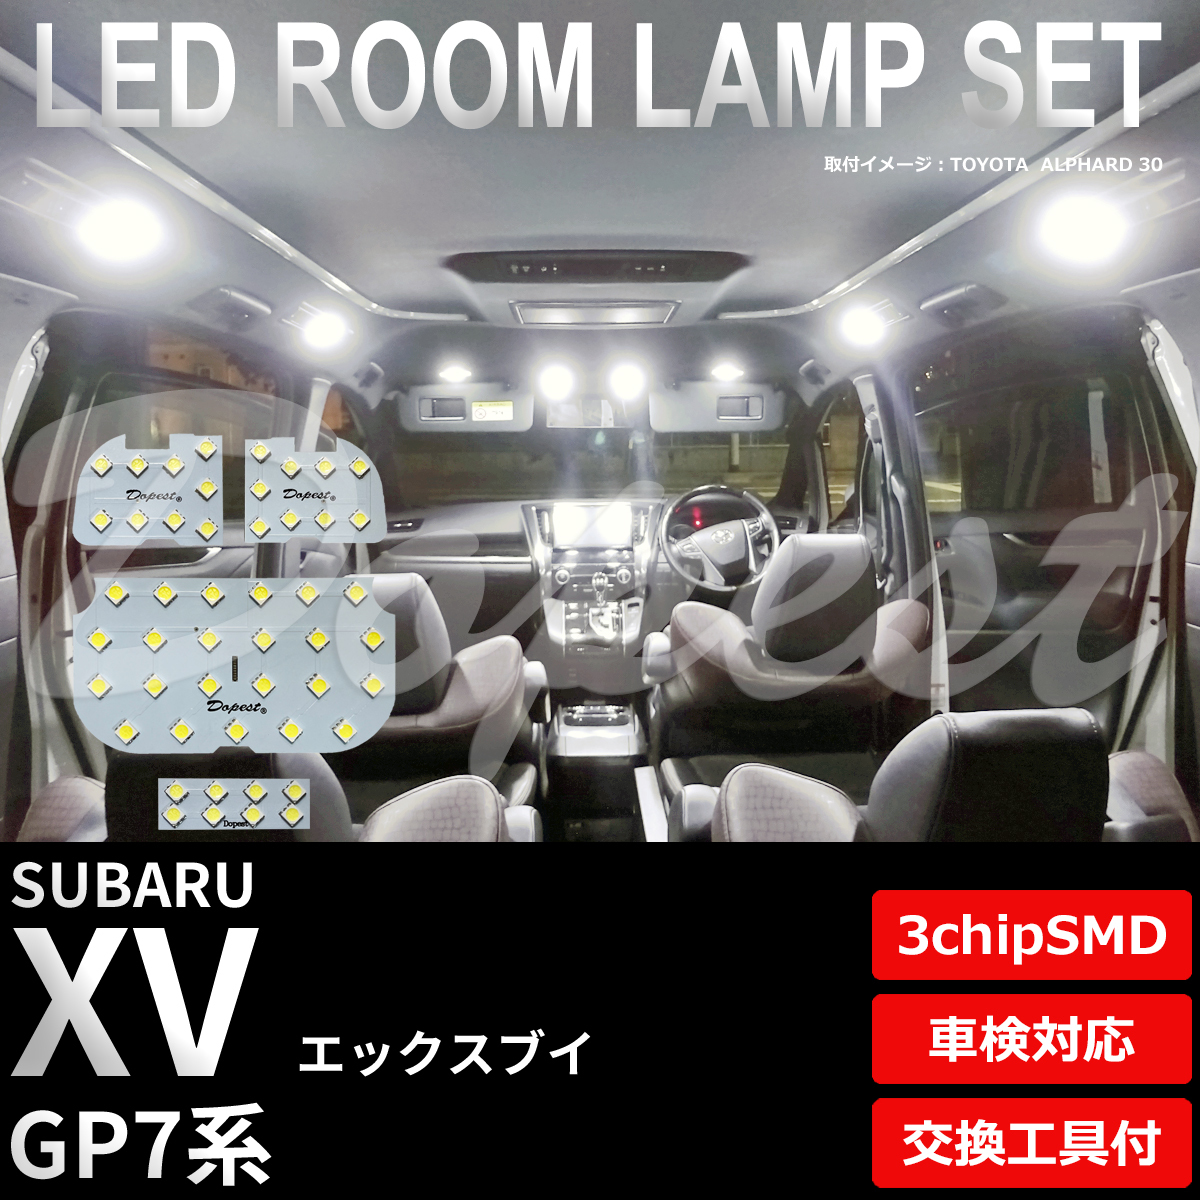 XV LEDルームランプセット GP7系 アイサイト無 車内 車種別_画像1